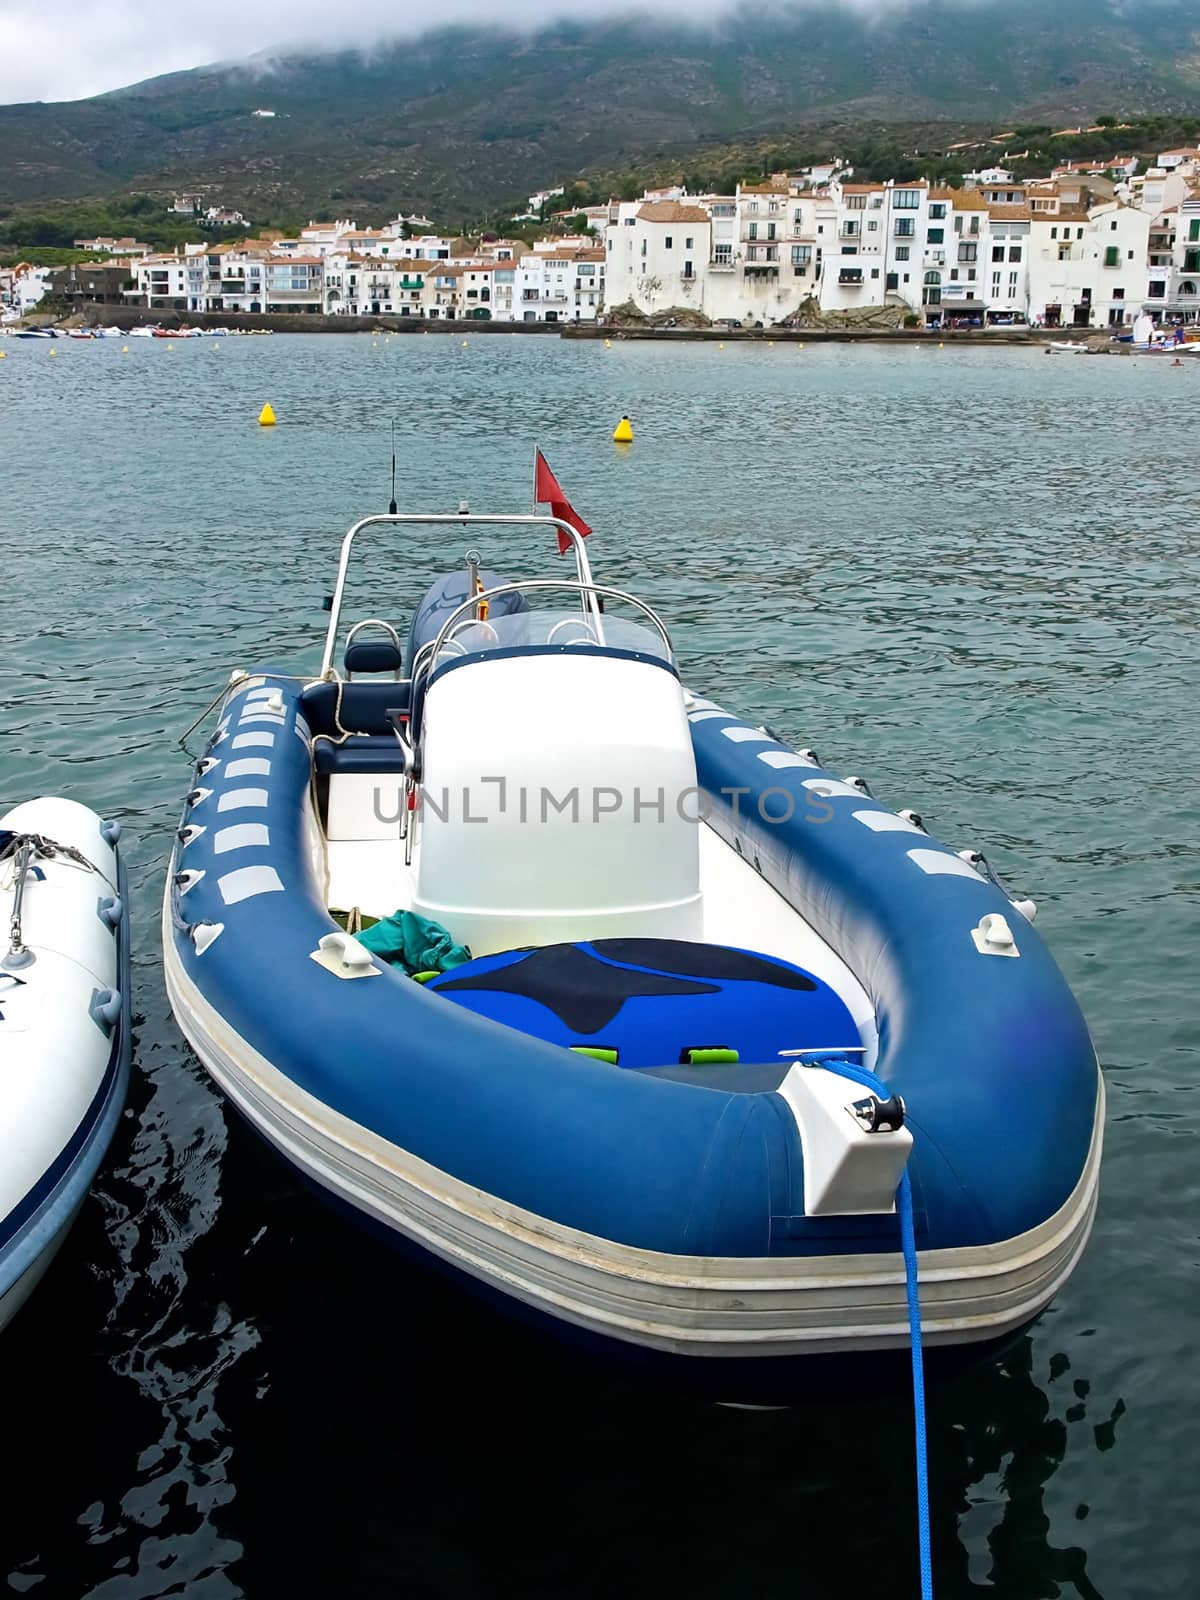 Blue motor inflatable boat in Cadaques, Costa Brava, Catalonia, Spain.